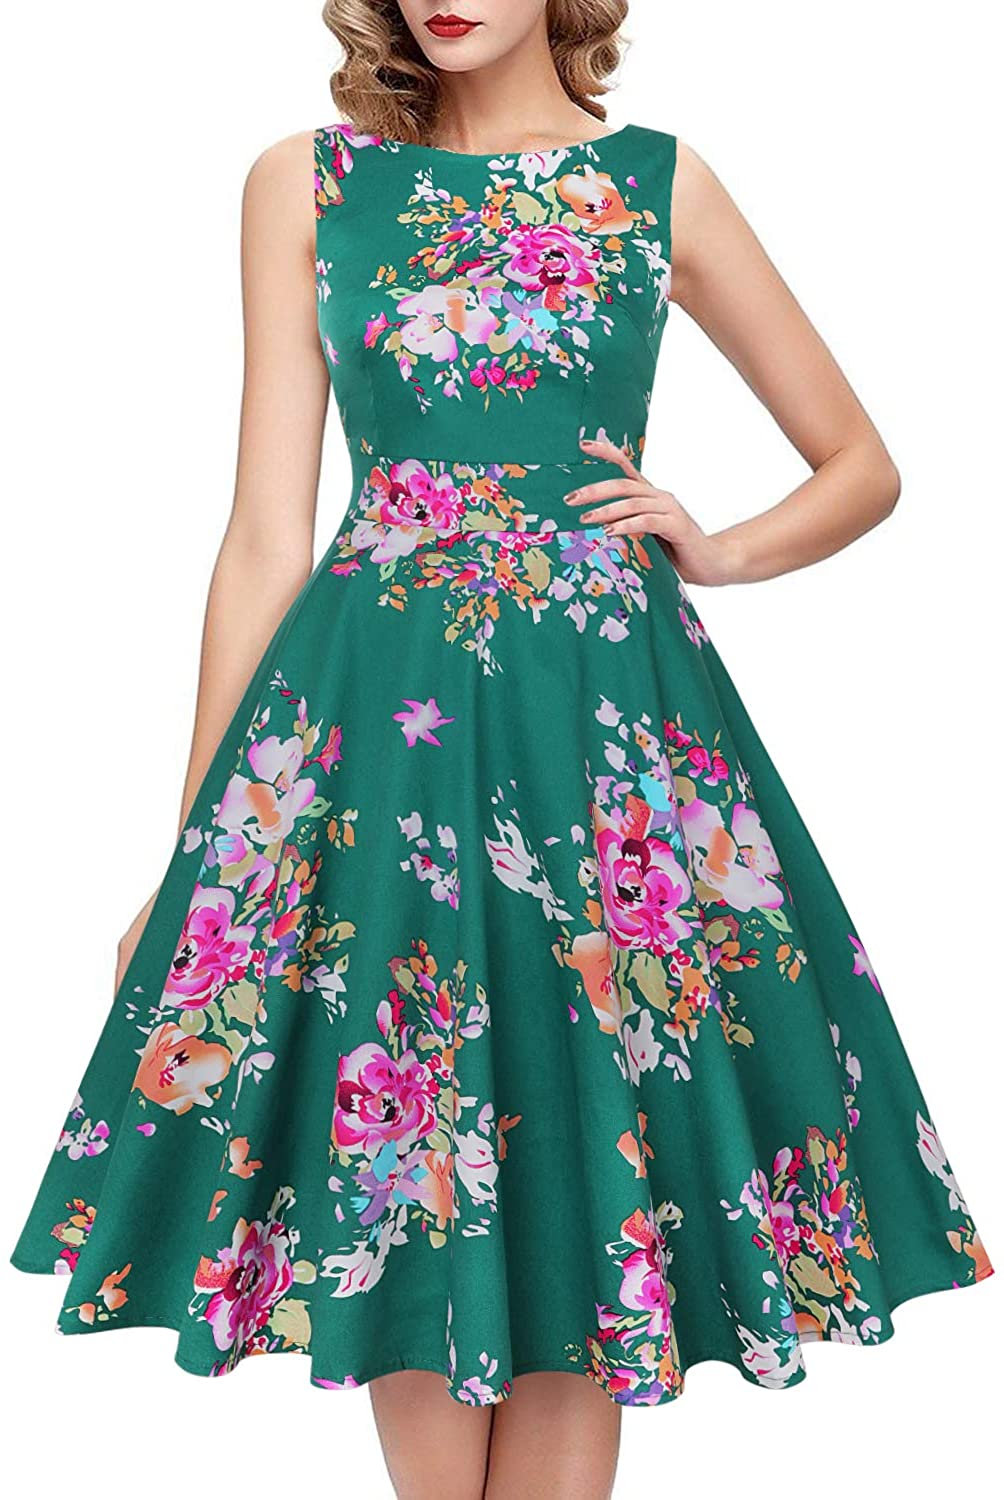 IHOT Vintage Tea Dress 1950's Floral Spring Garden Retro Swing Prom ...